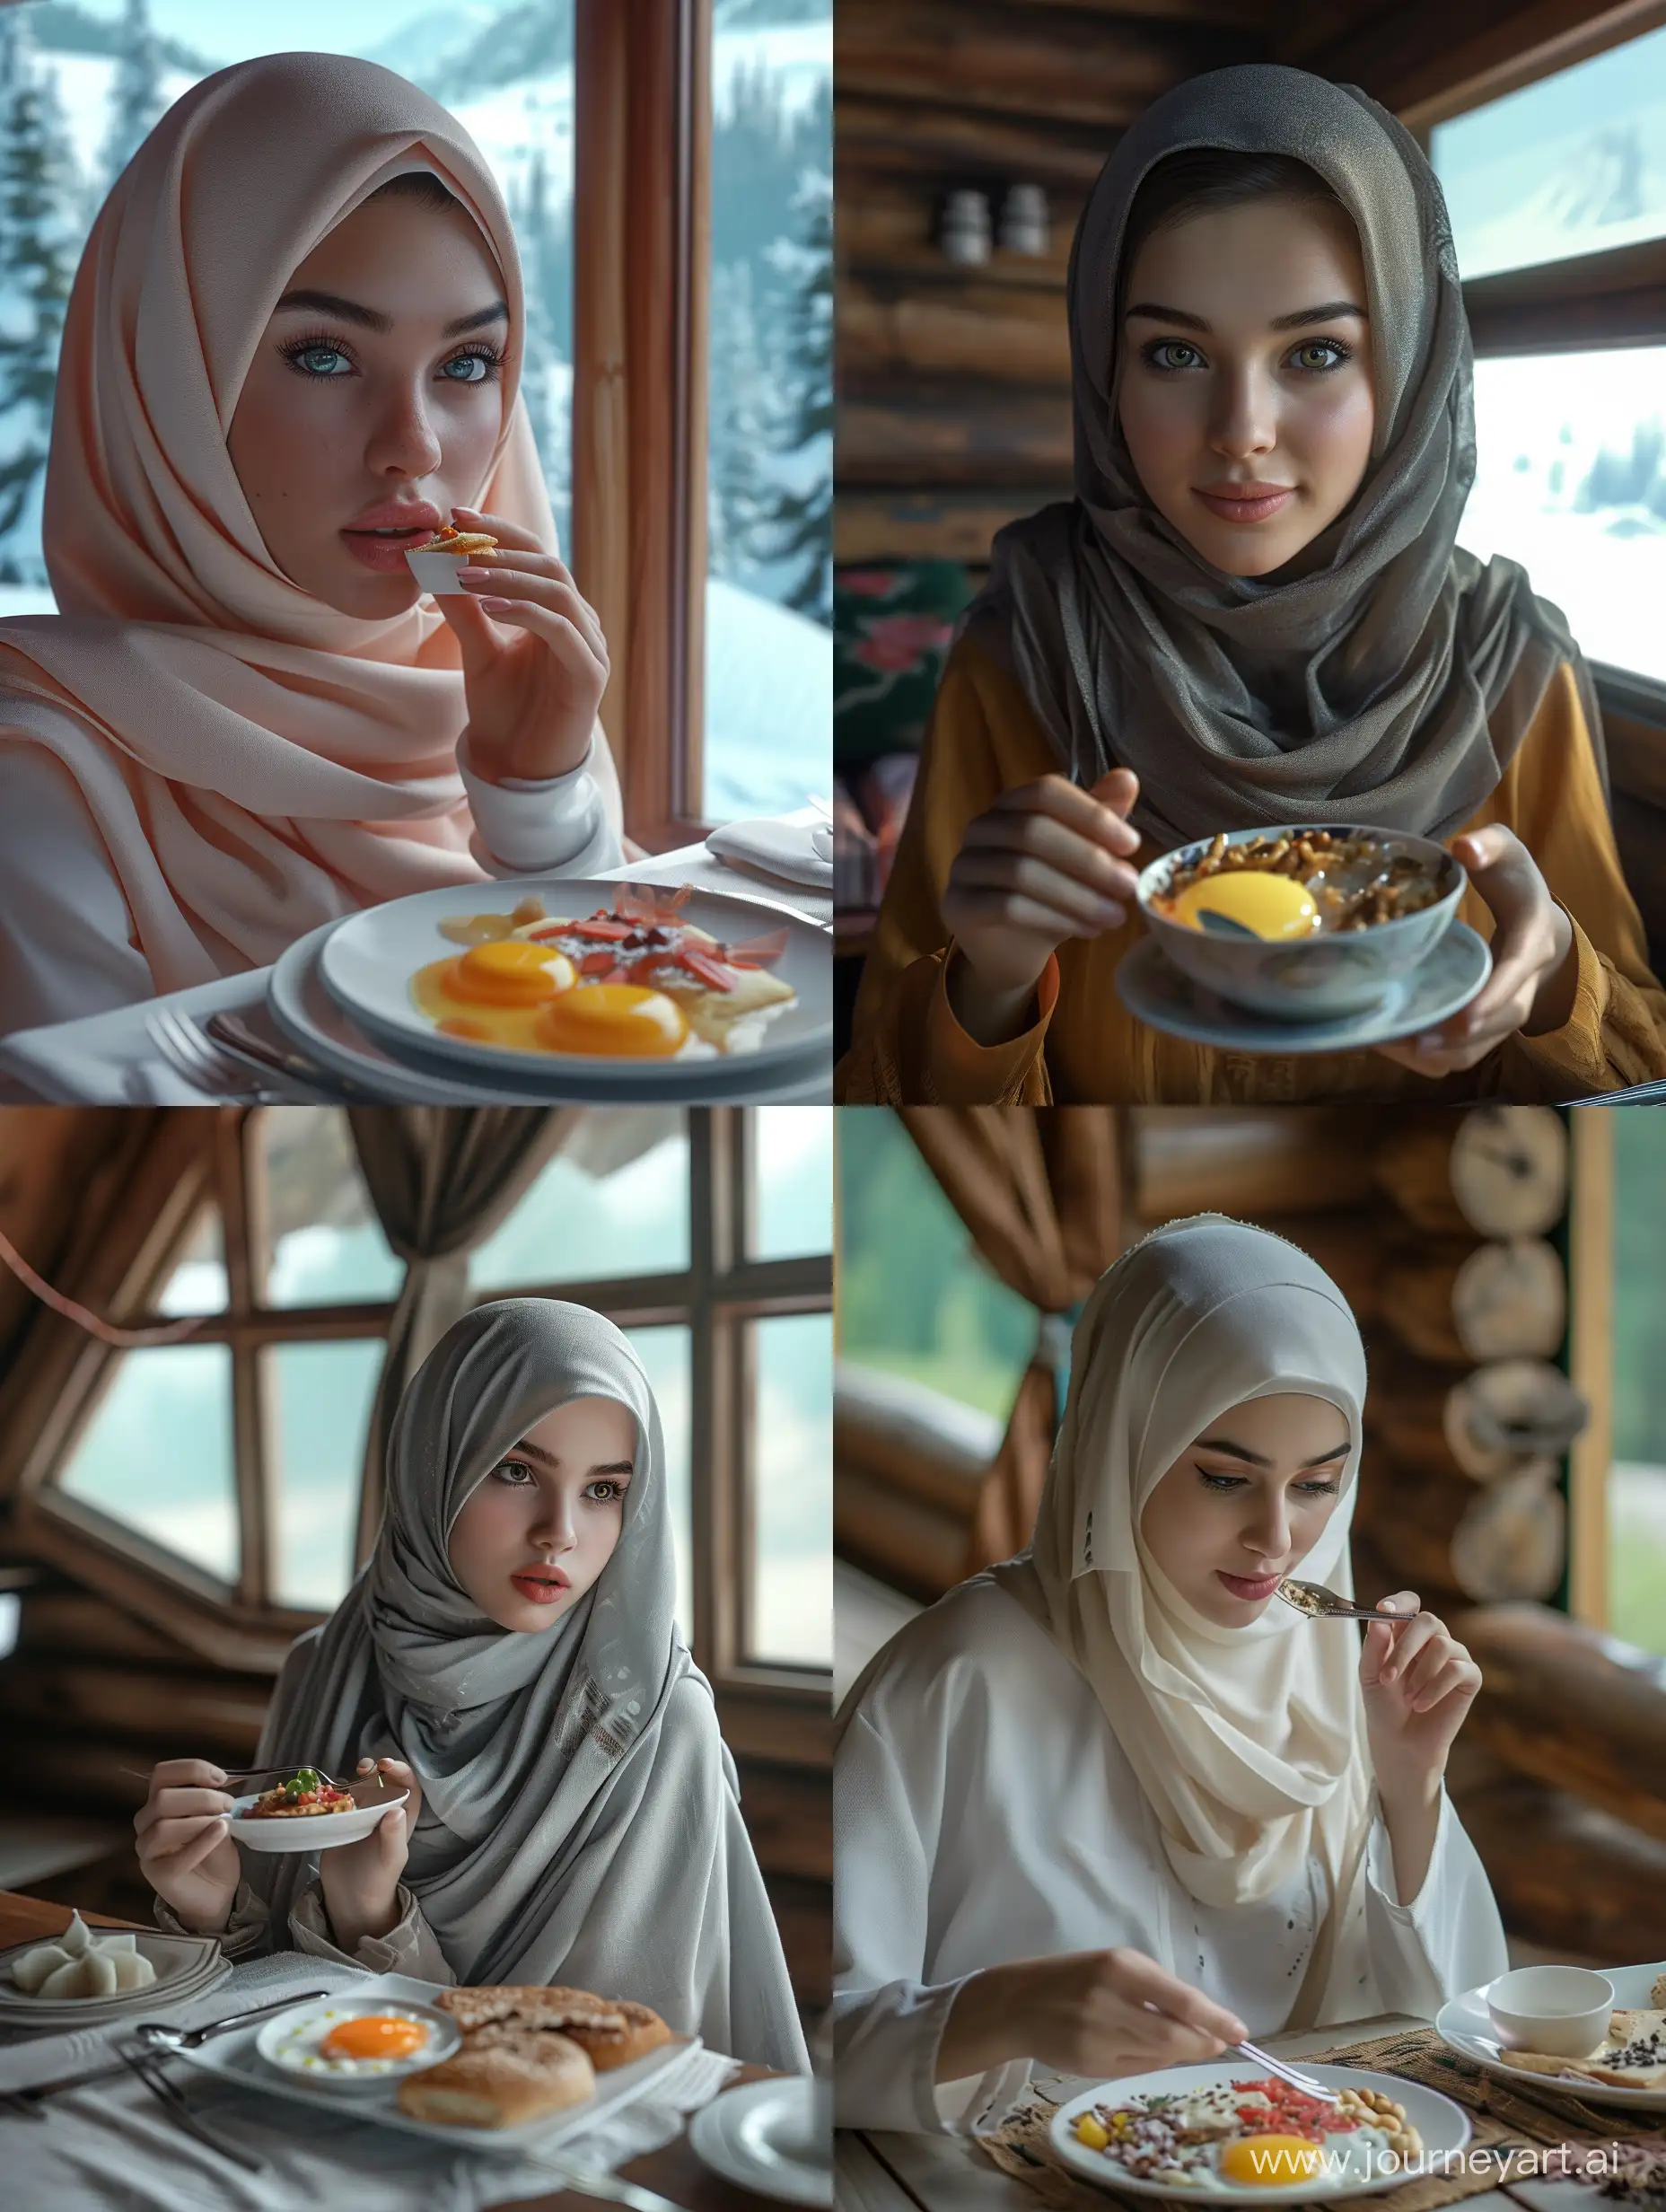 Symmetrical-Balance-in-a-HyperRealistic-Scene-Beautiful-Muslim-Girl-Eating-Breakfast-in-a-Cabin